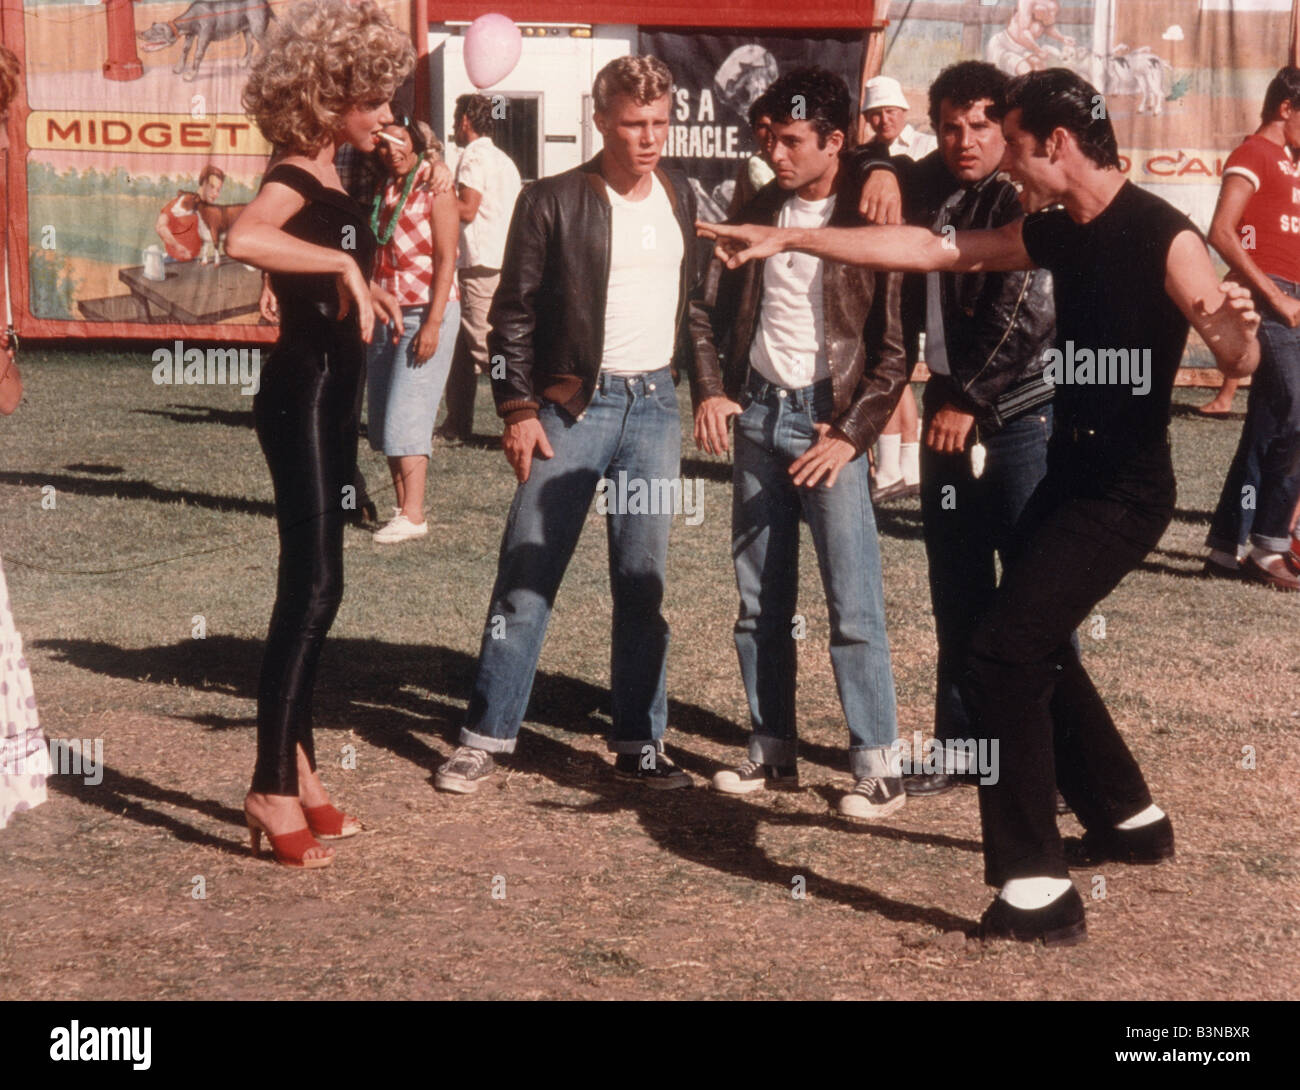 La graisse 1978 Paramount/Robert Stigwood film avec John Travolta et Olivia Newton-John à droite à gauche Banque D'Images